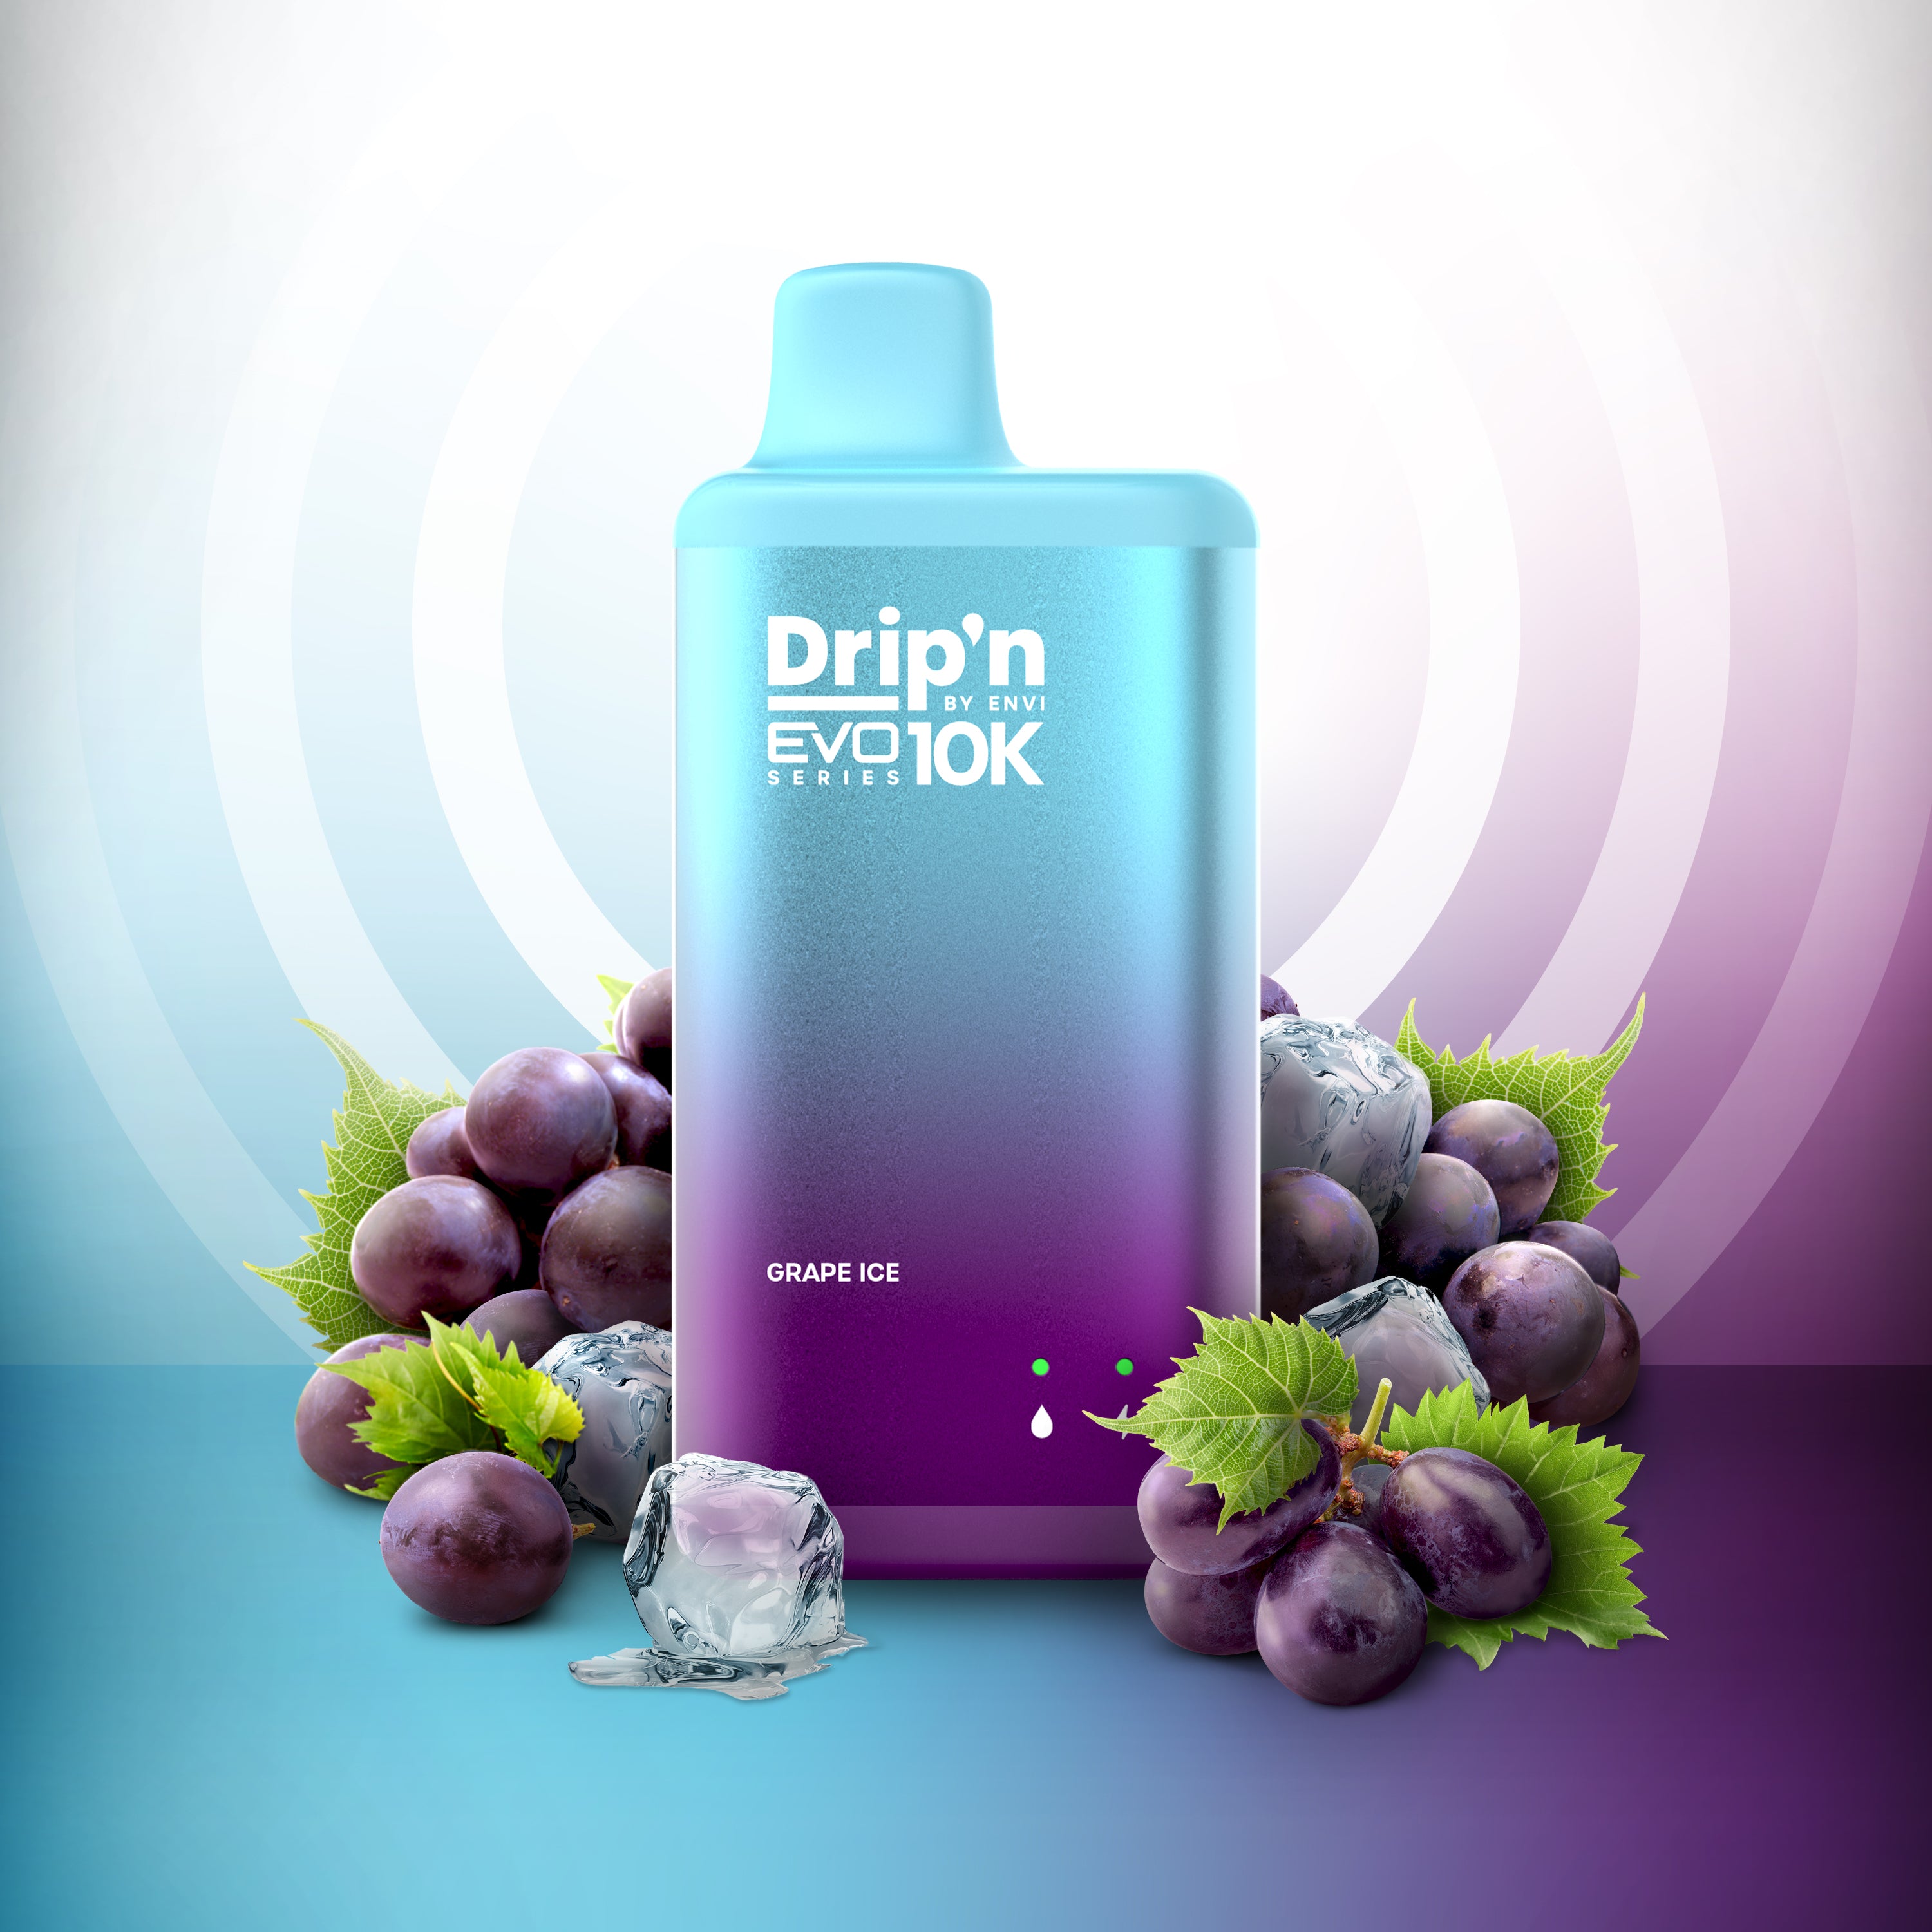 Grape Ice - Drip'n by Envi EVO 10K - 5pc/Carton